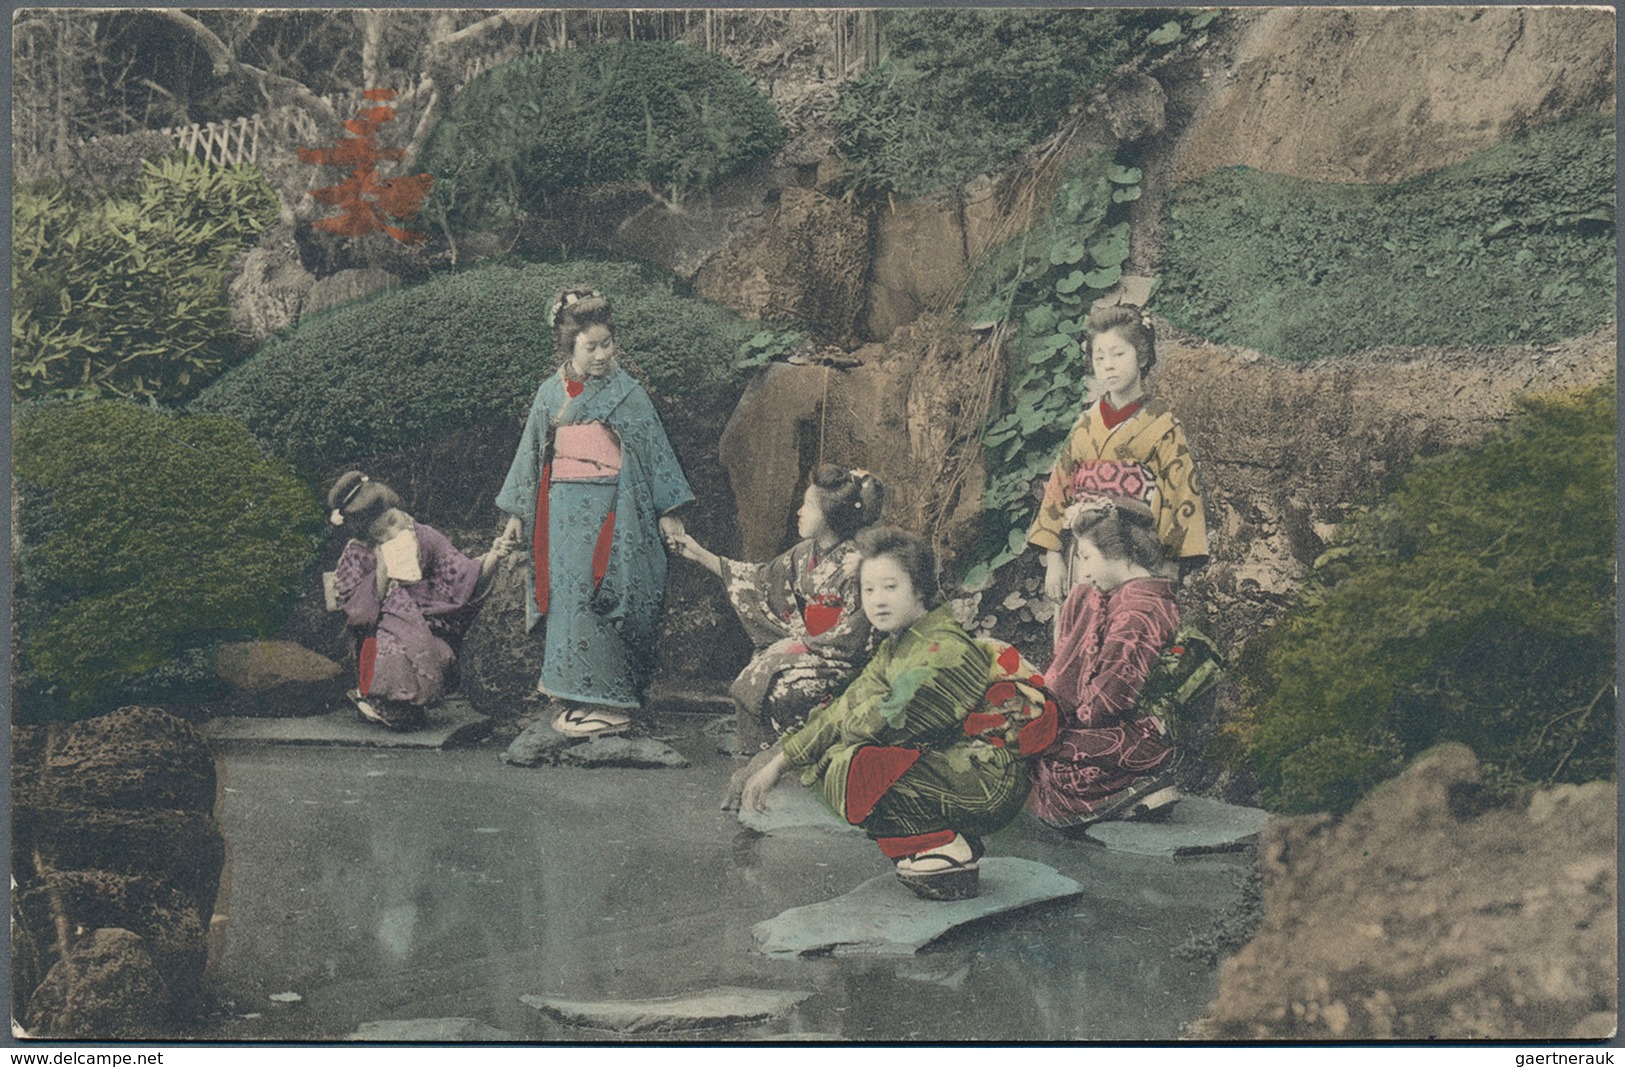 29481 Japan - Besonderheiten: 1900/30 (ca.) 20 ppc (two mailed) showing ladies, geishas with interesting h